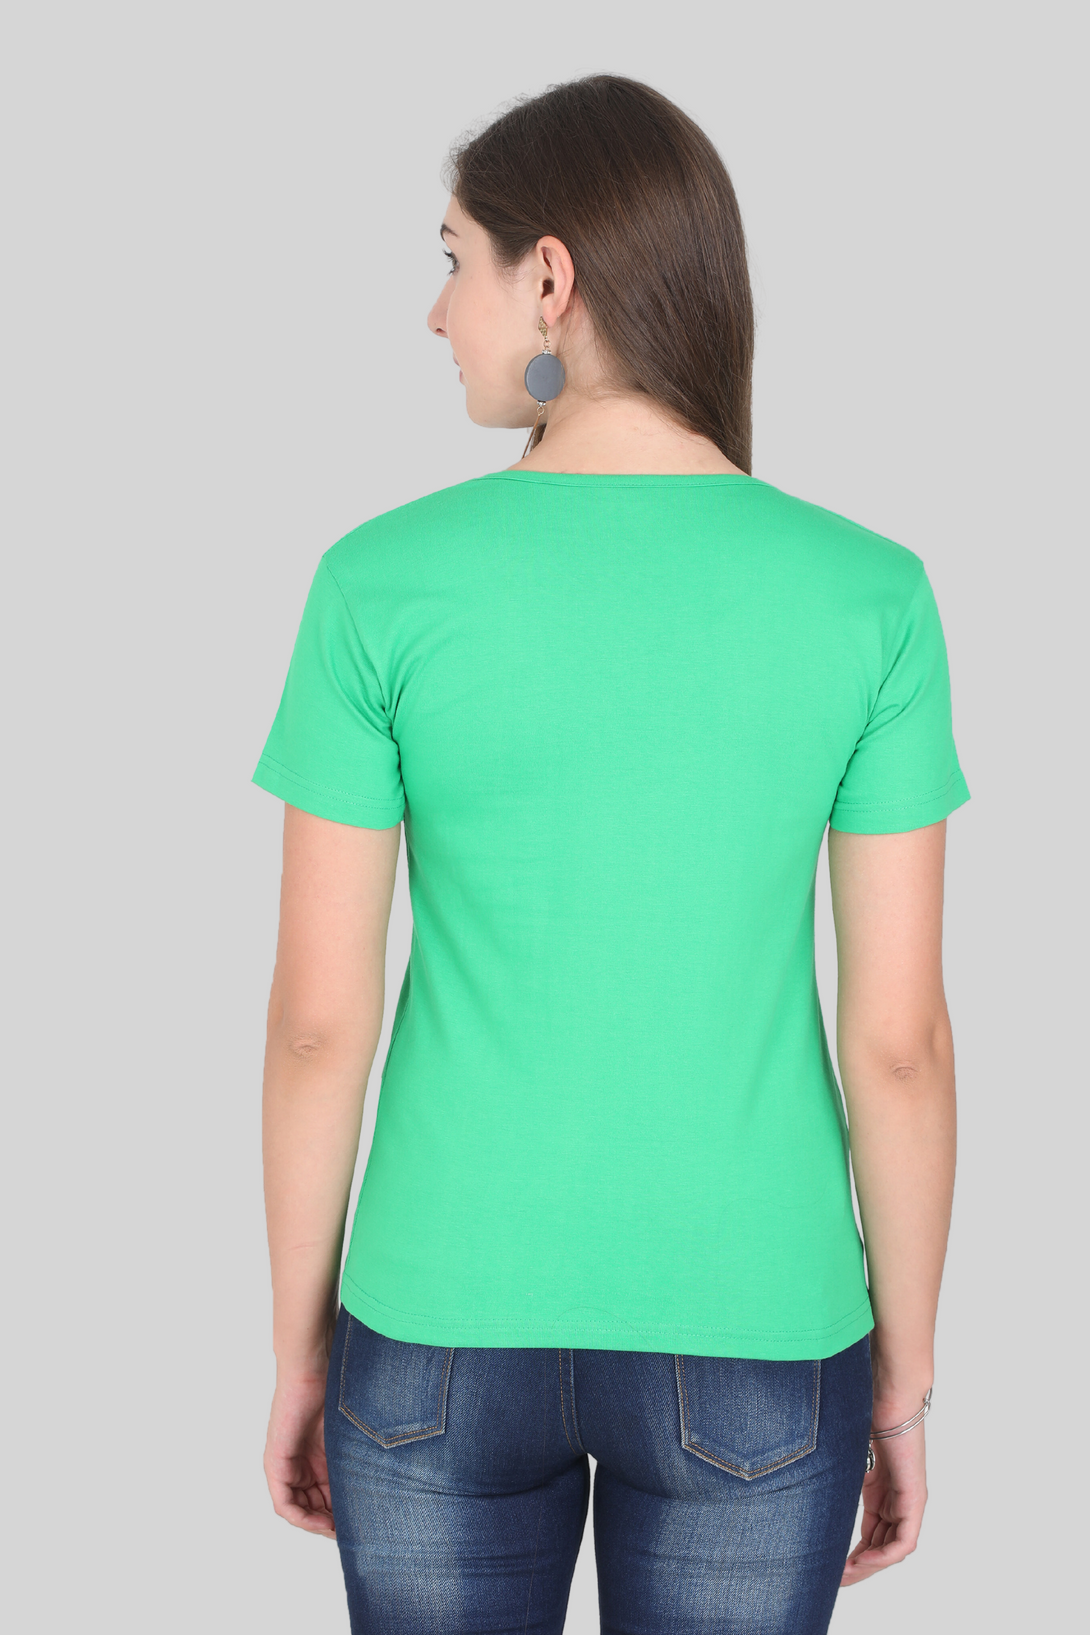 Flag Green Scoop Neck T-Shirt For Women - WowWaves - 4